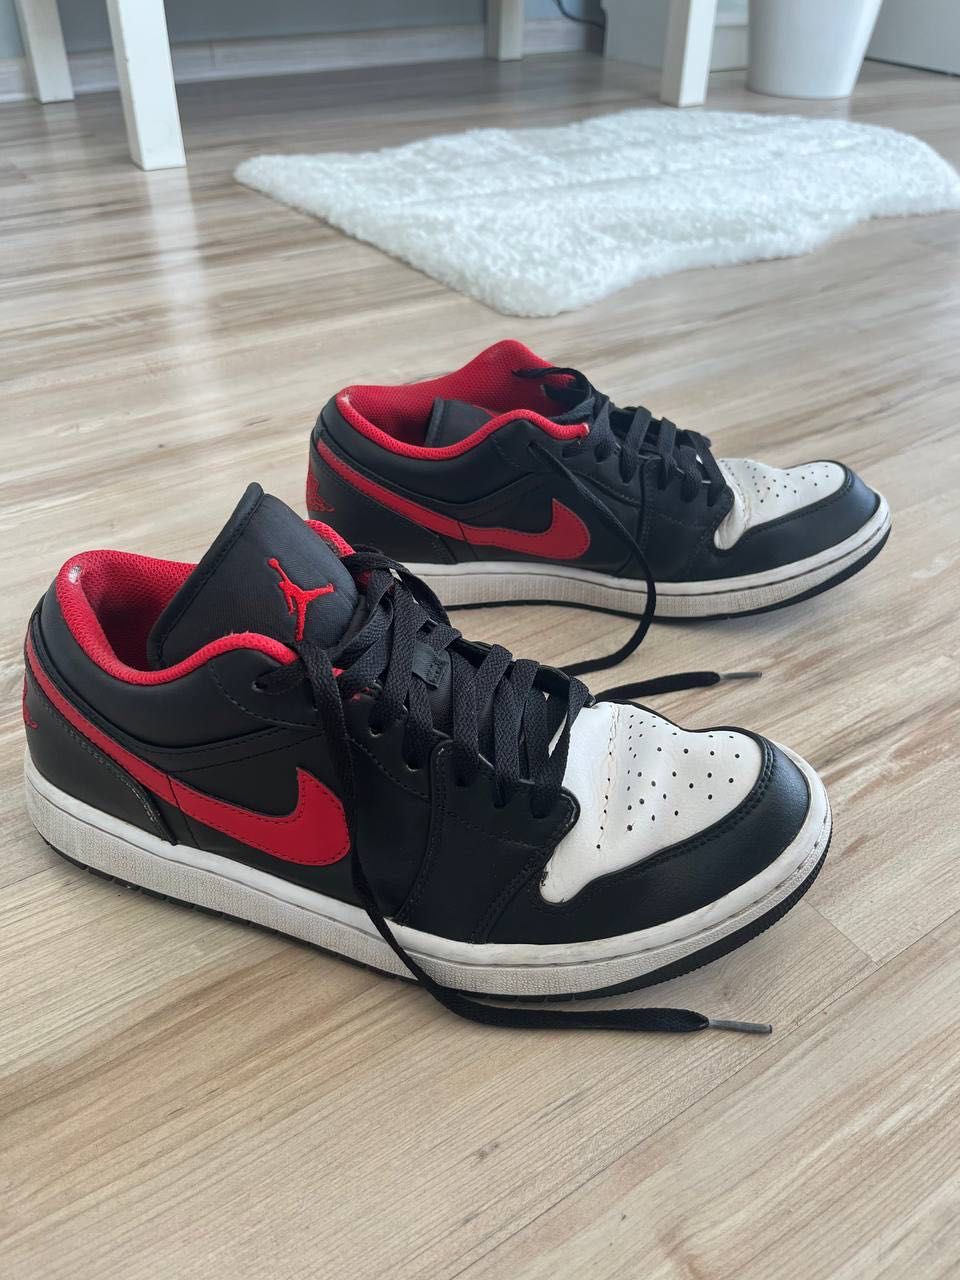 Nike Air Jordan 1 low czerwony swoosh